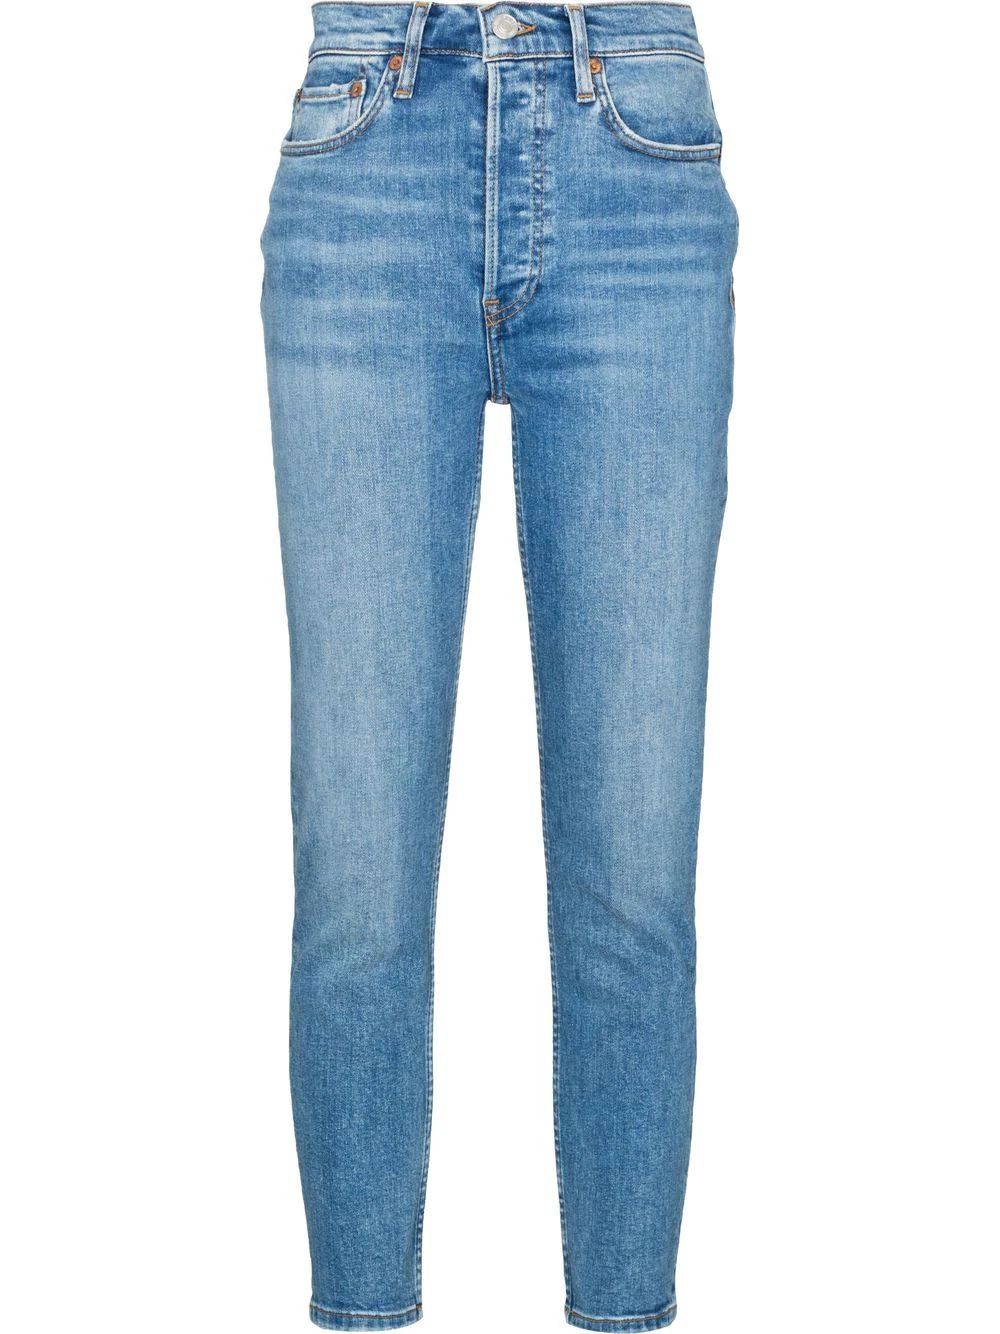 90s high-rise skinny jeans | Farfetch Global